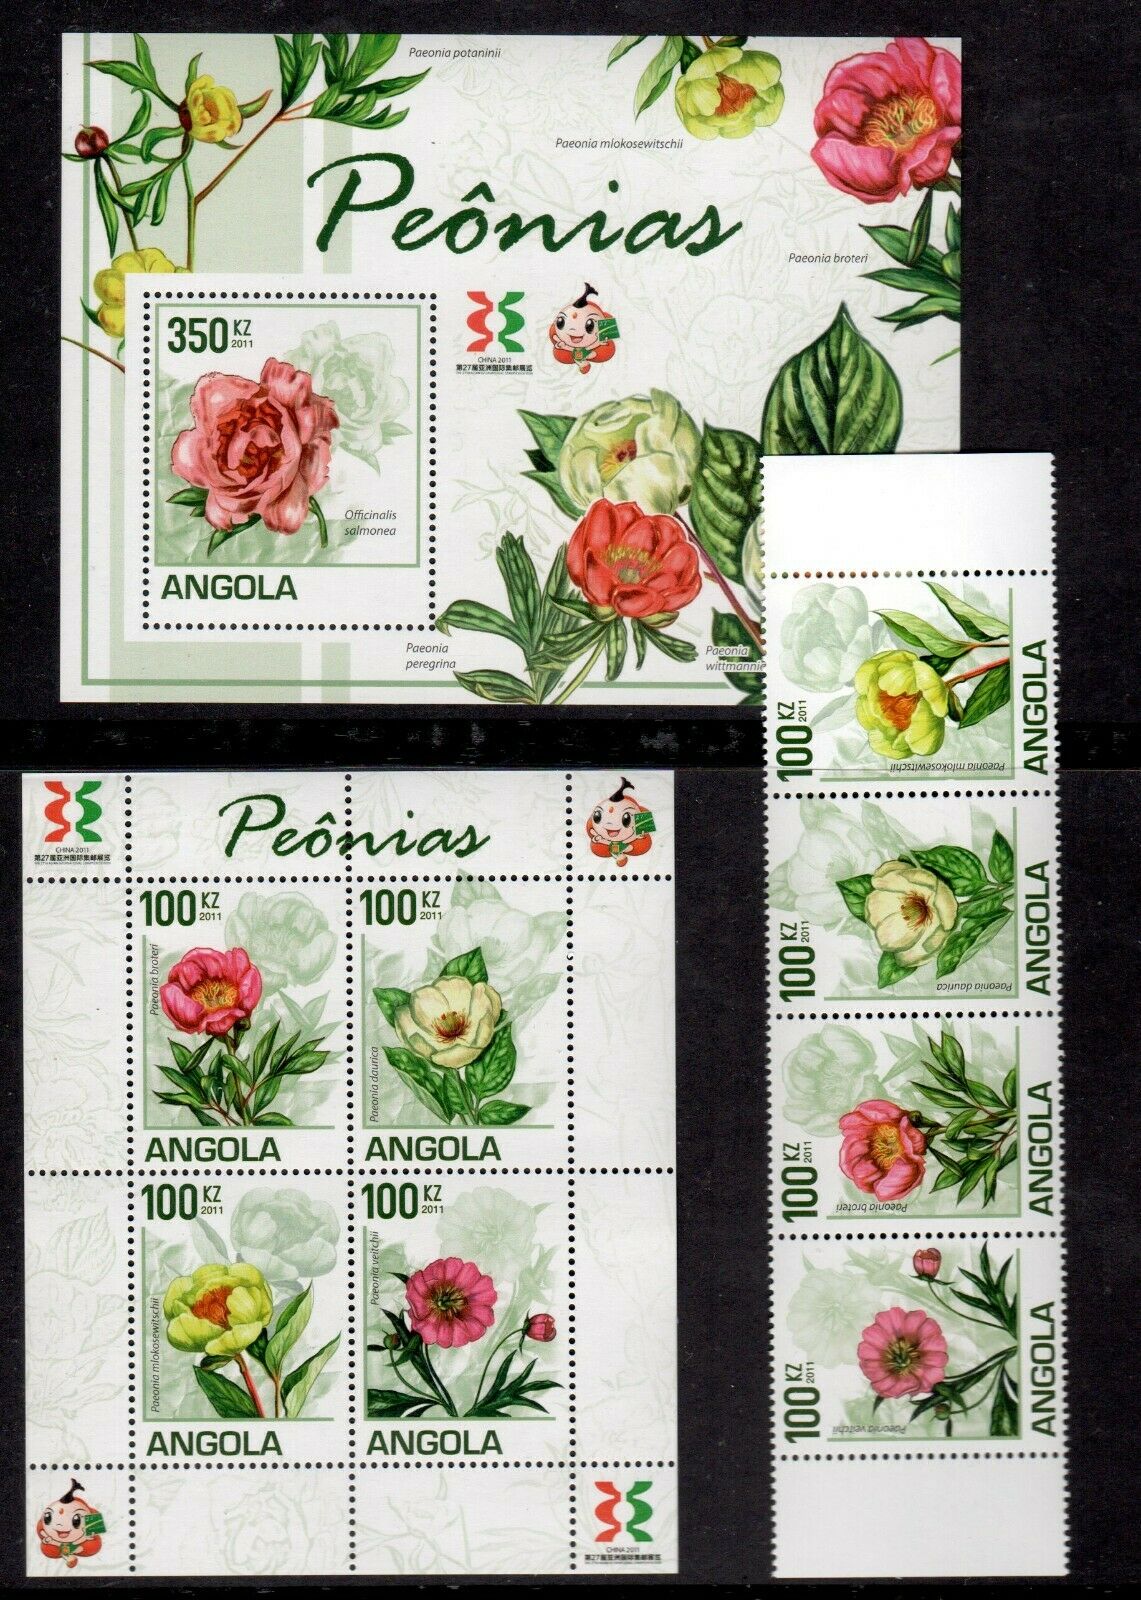 Angola 2011 Peonias China 27th Asian International Stamp Exhibition